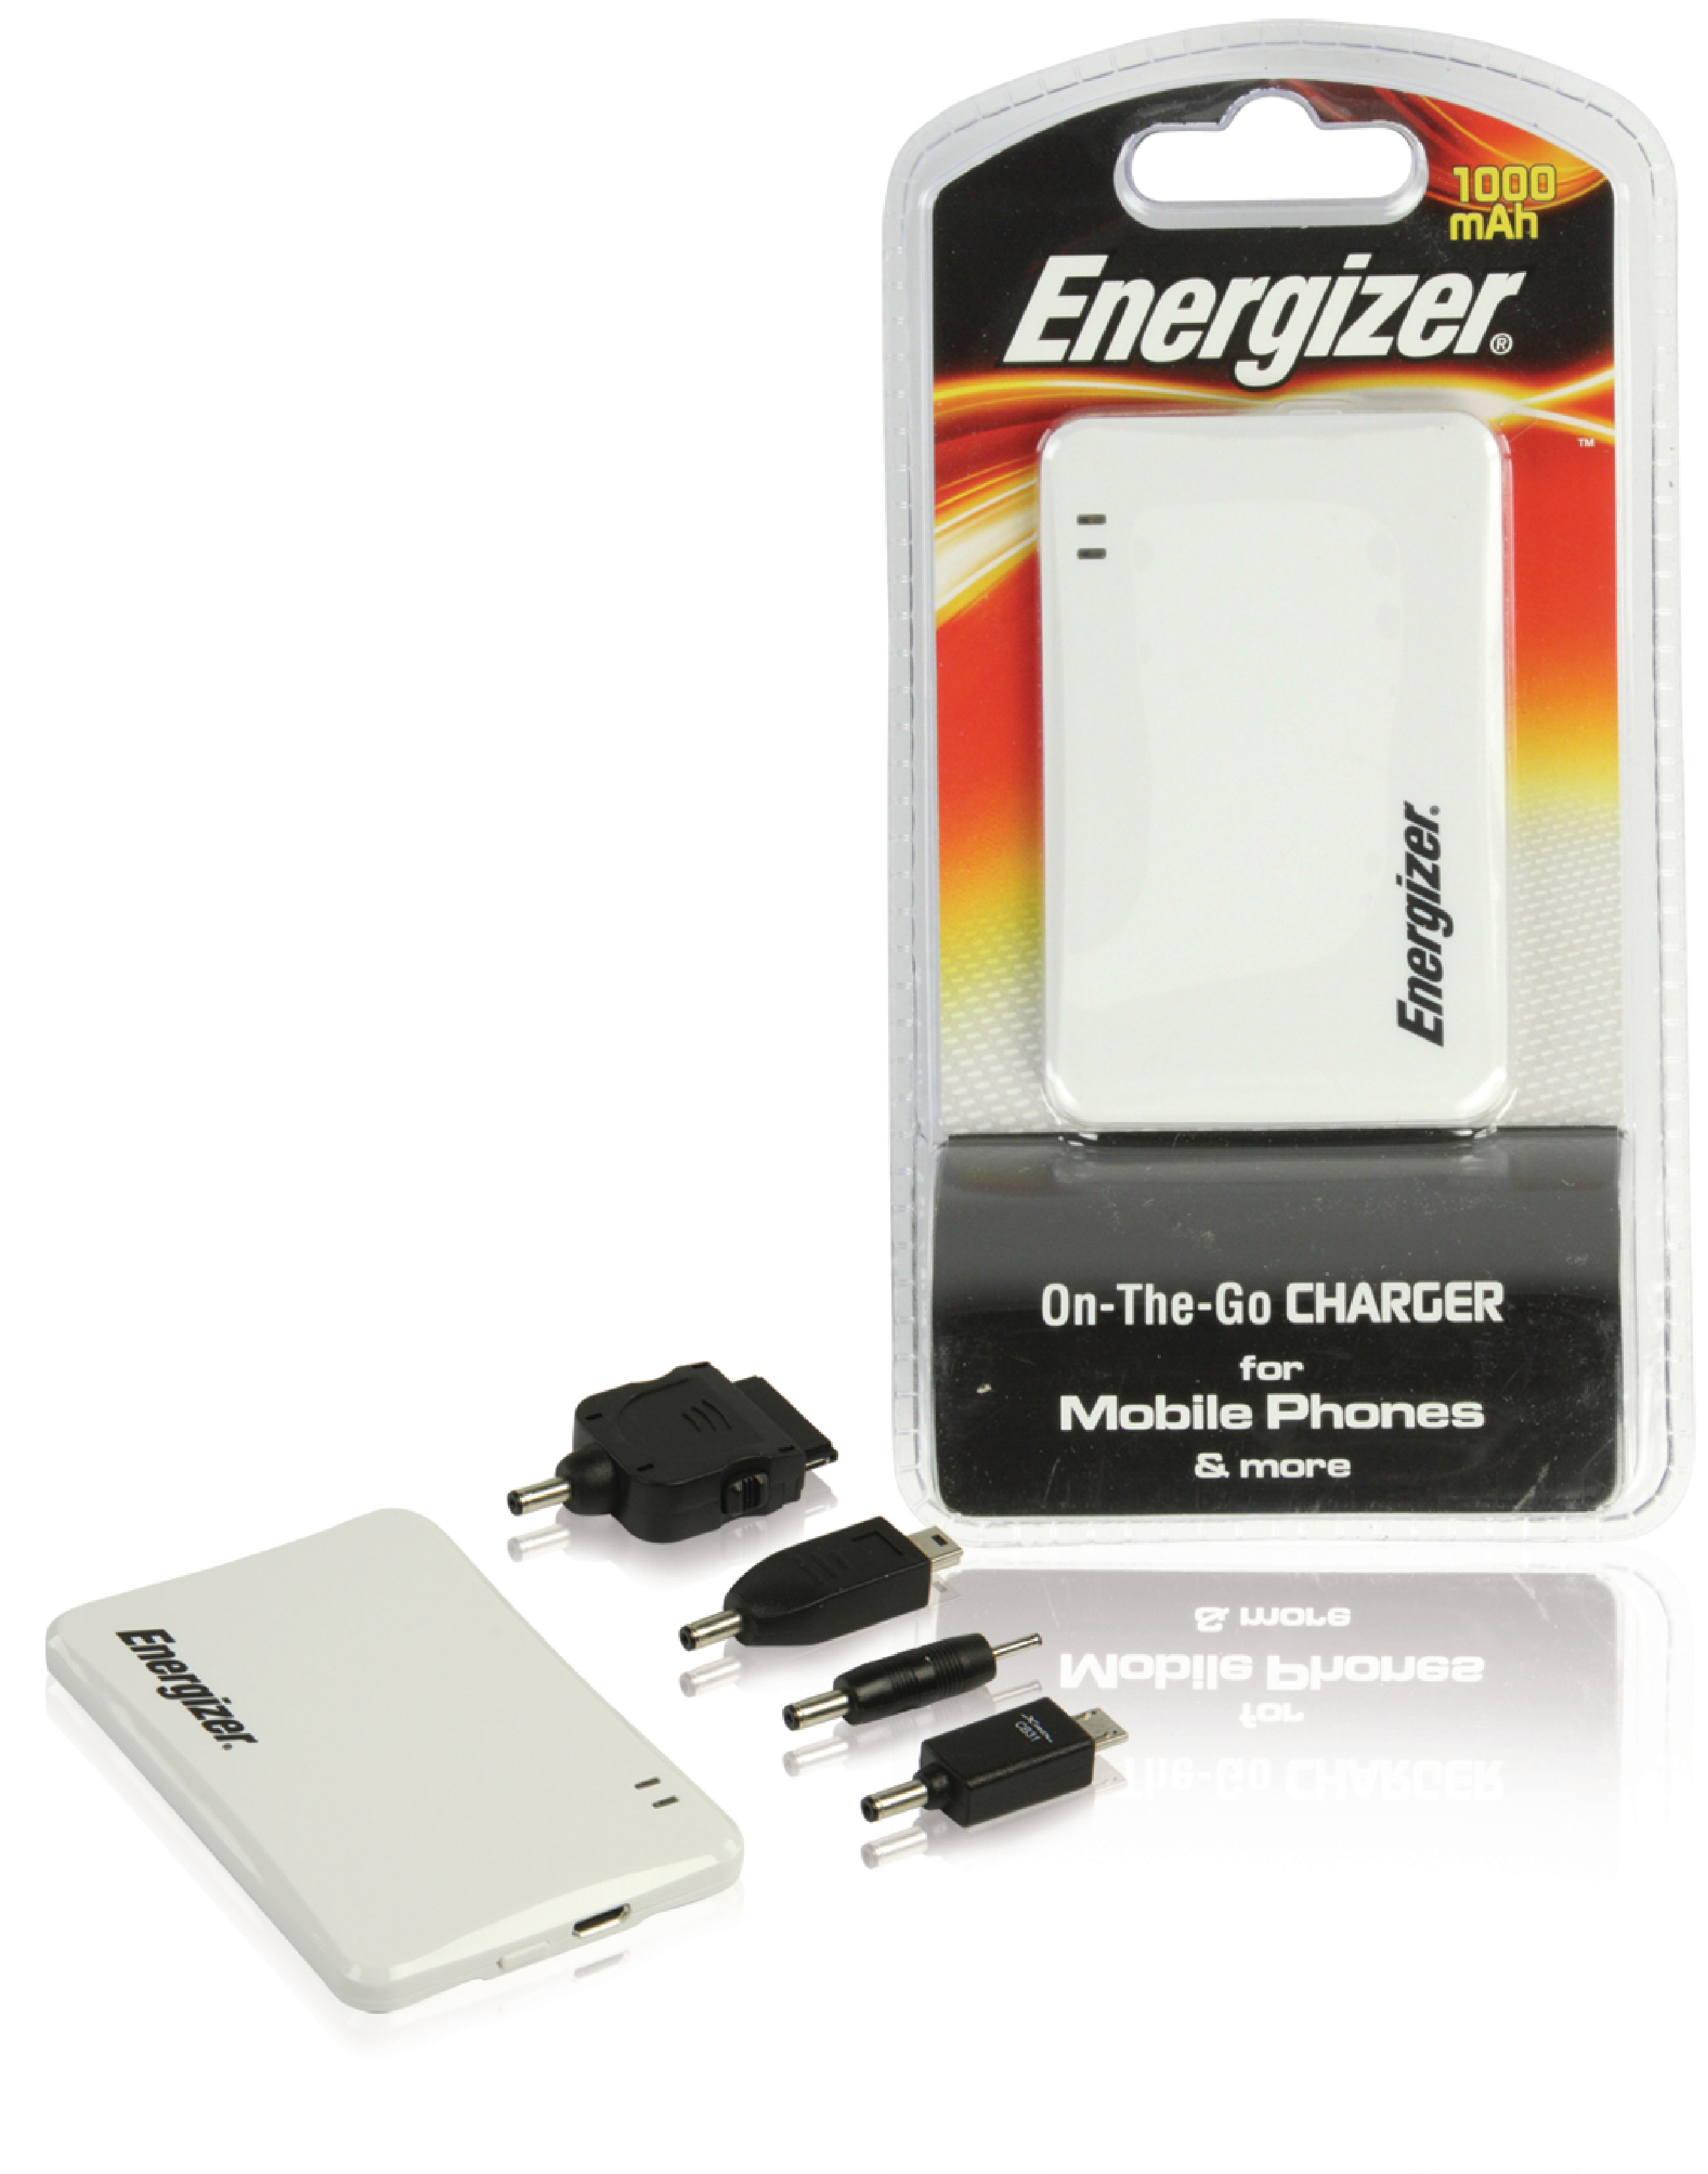 Portable Power Bank 1000 mAh USB - Energizer - Blanc B2240 Energizer